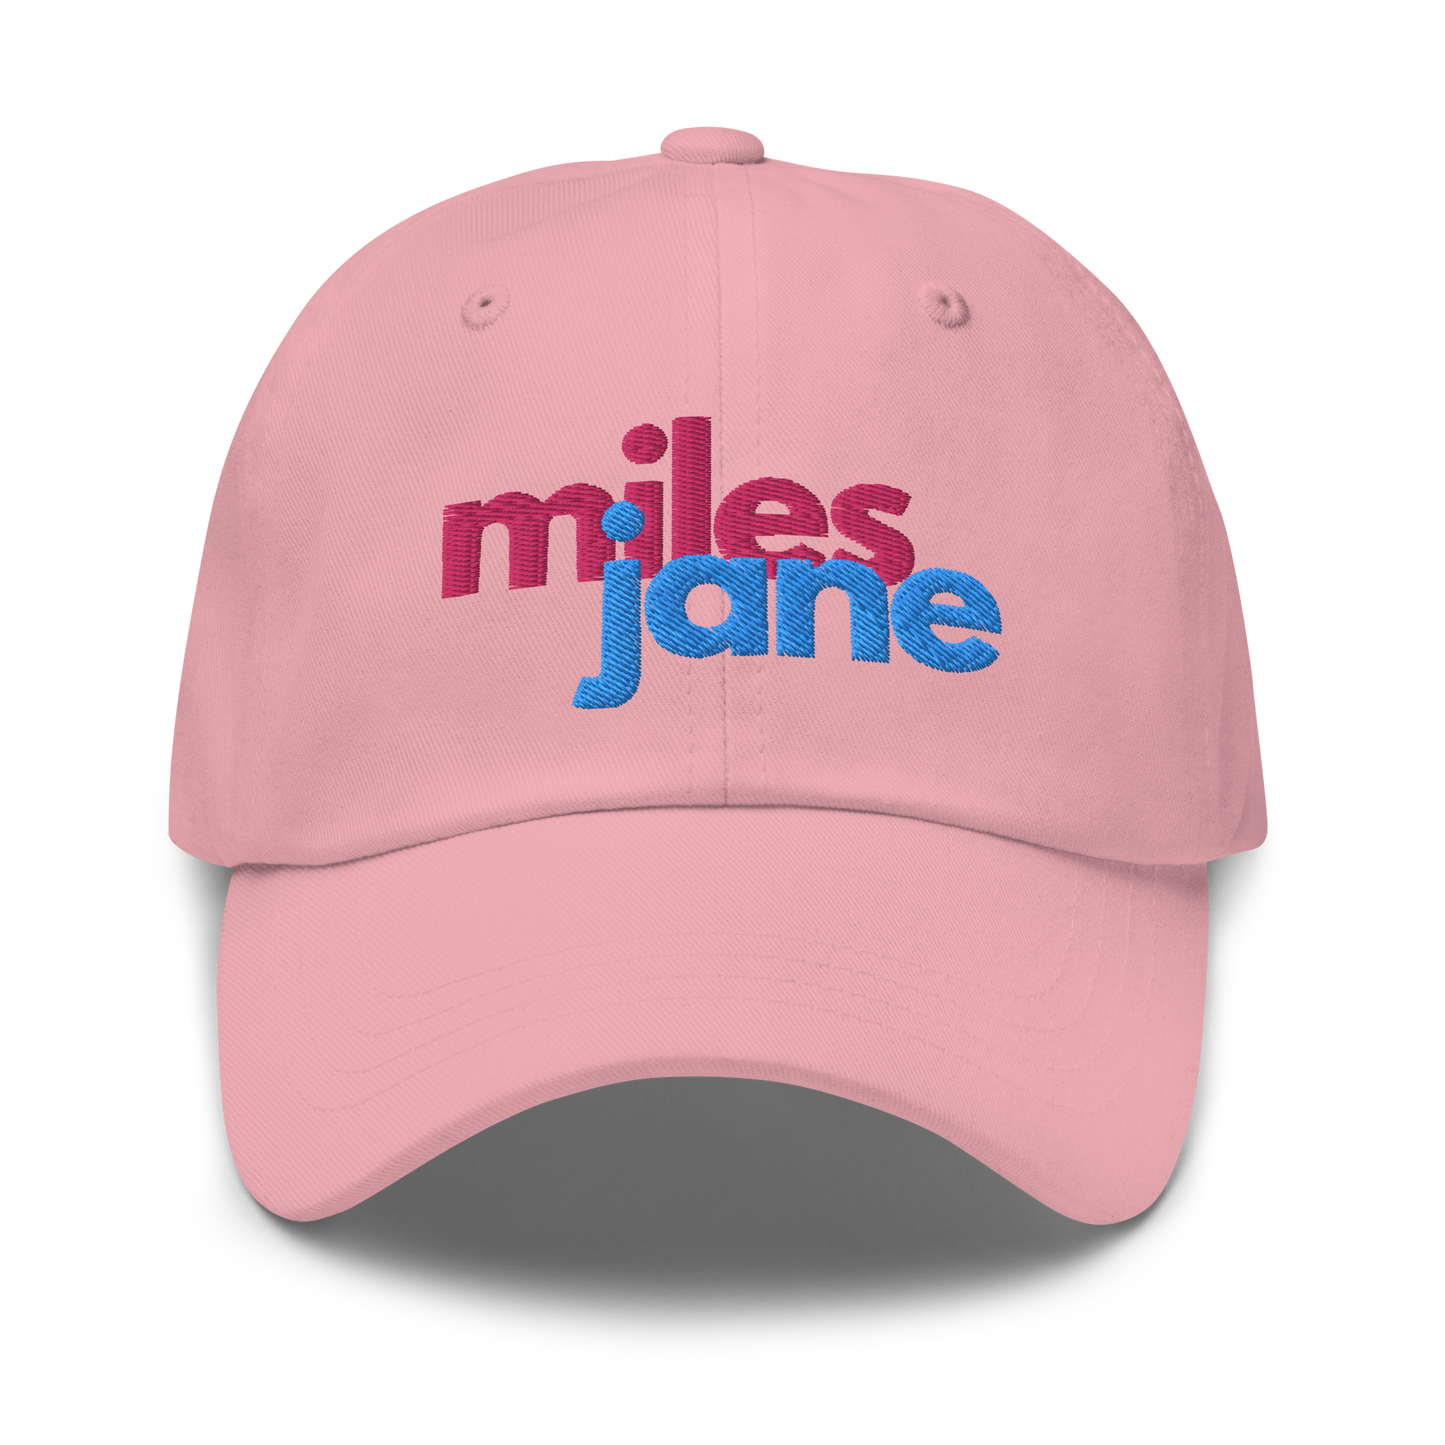 MilesJane - The Classics Hat (Yupoong) - MJC008